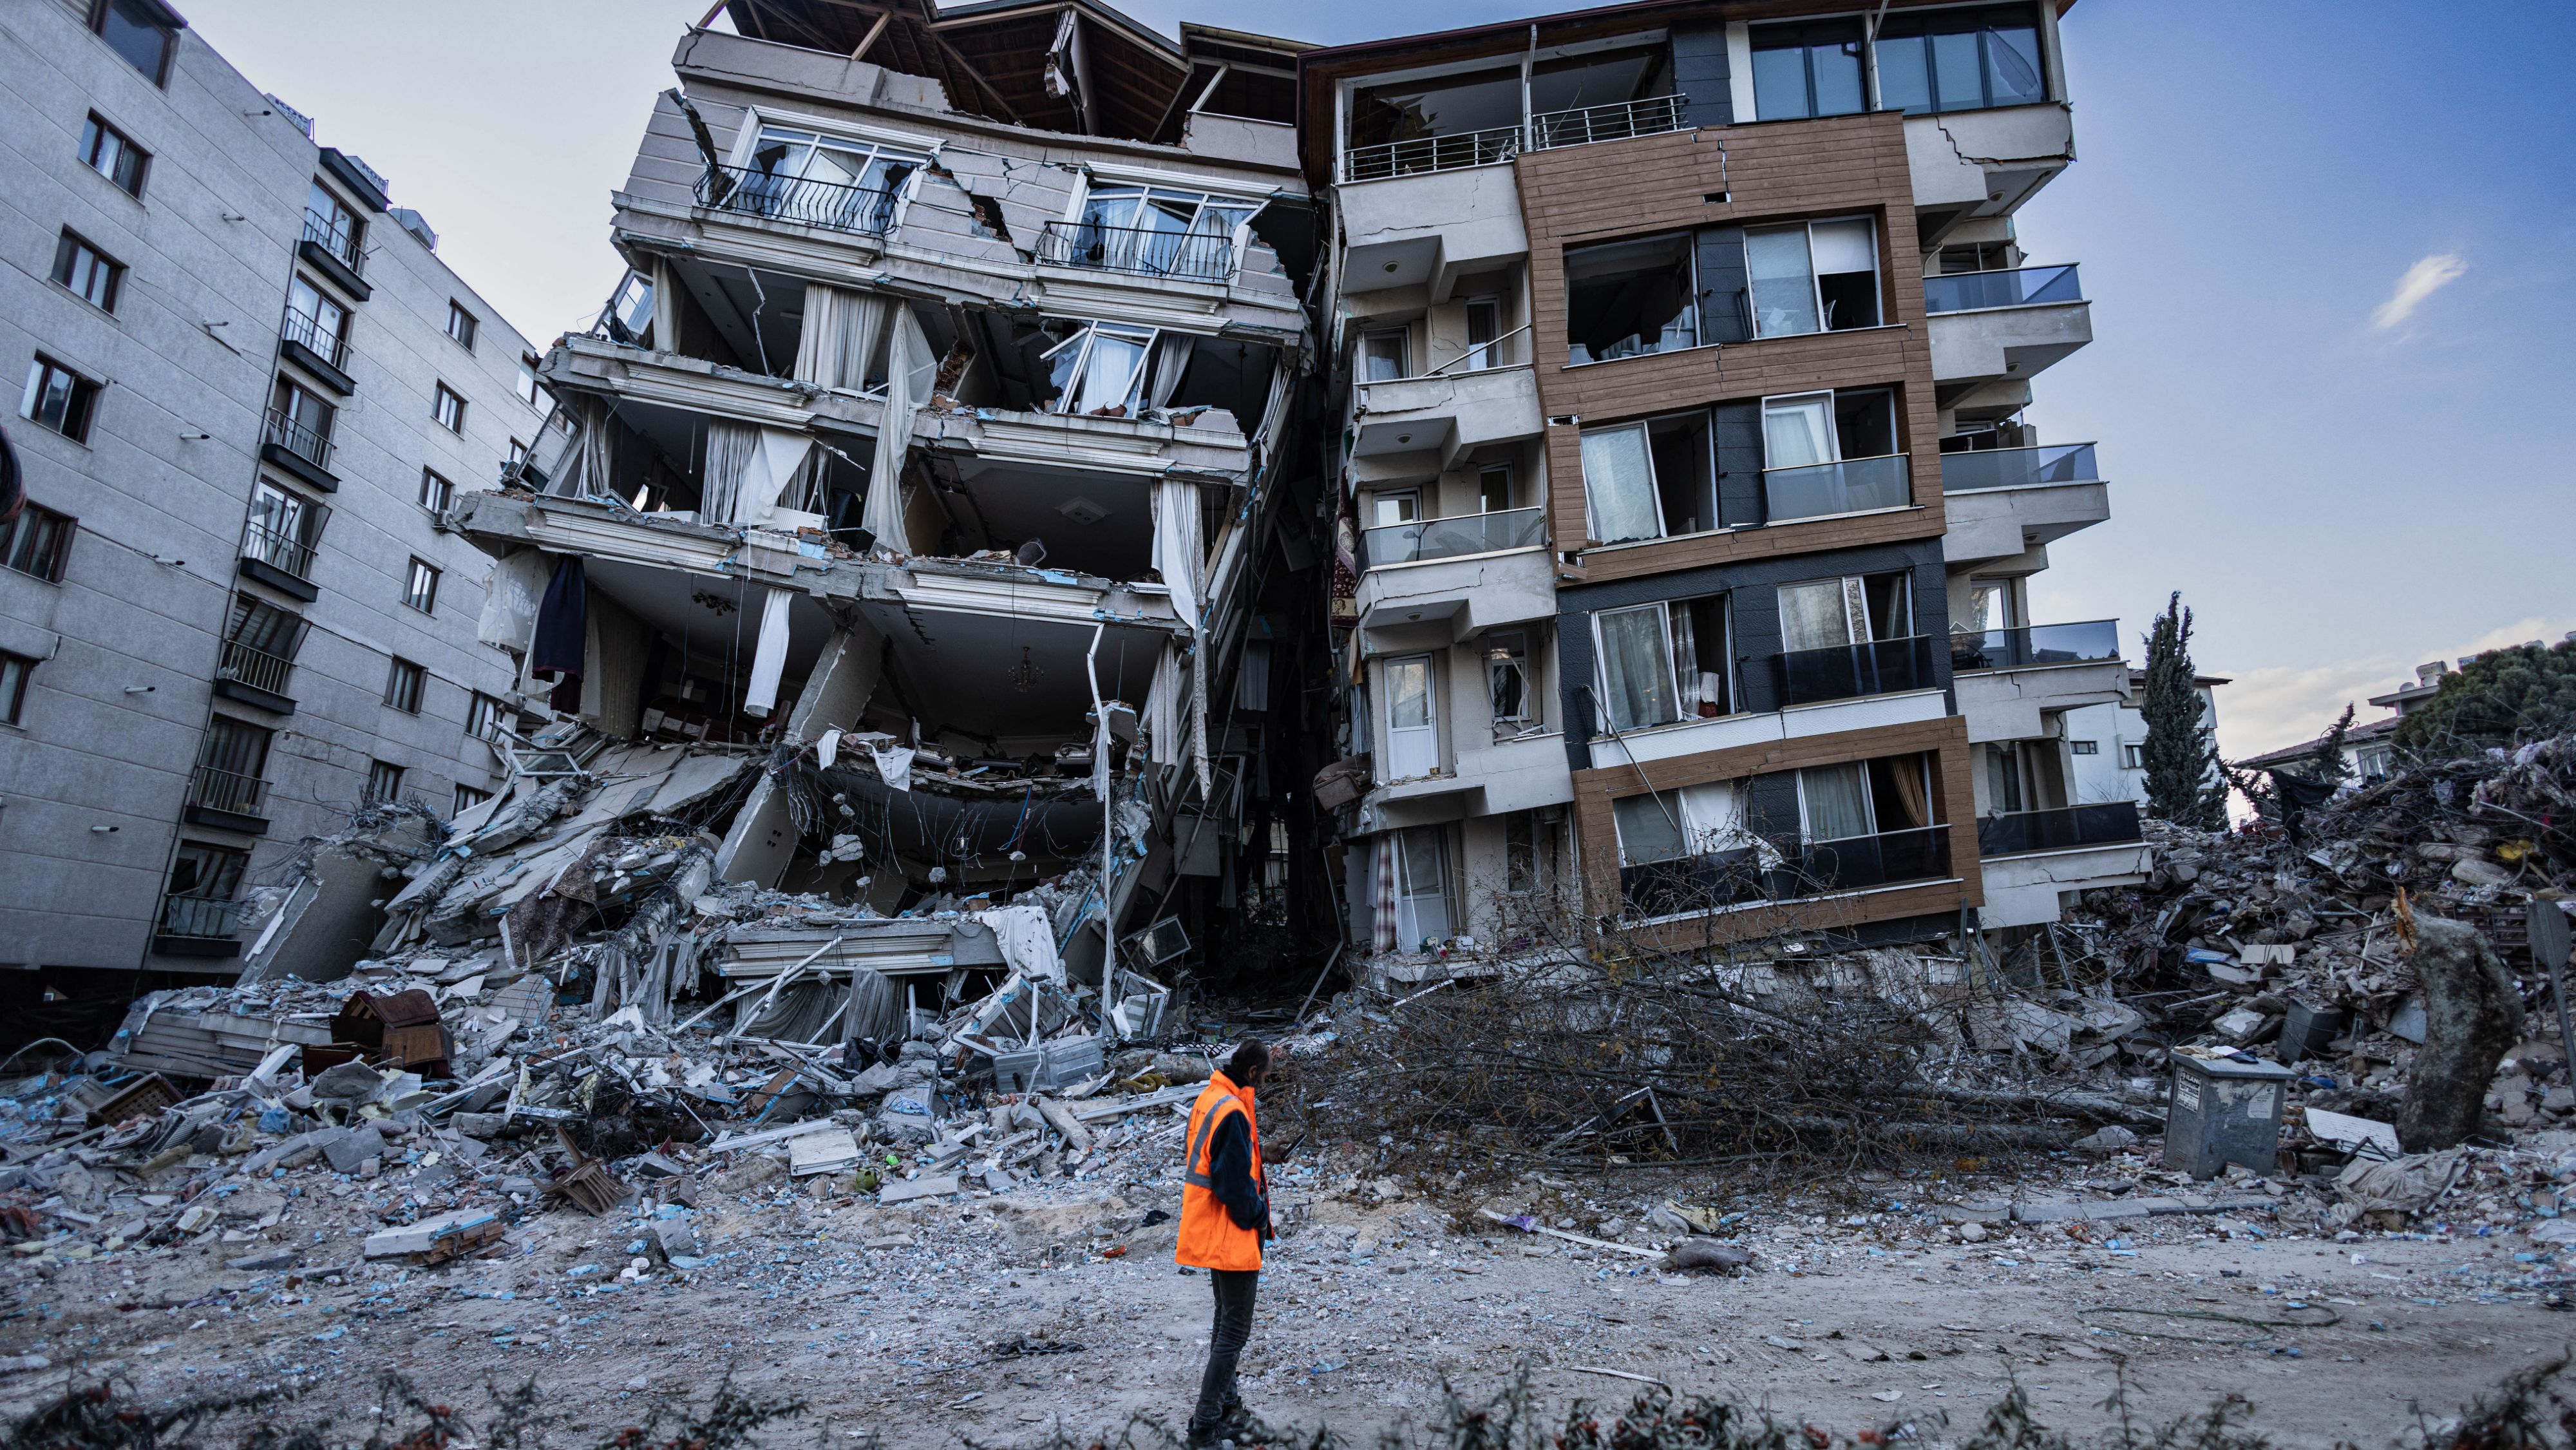 breaking news: 6.3 magnitude earthquake rocks turkey - residents share terrifying experience